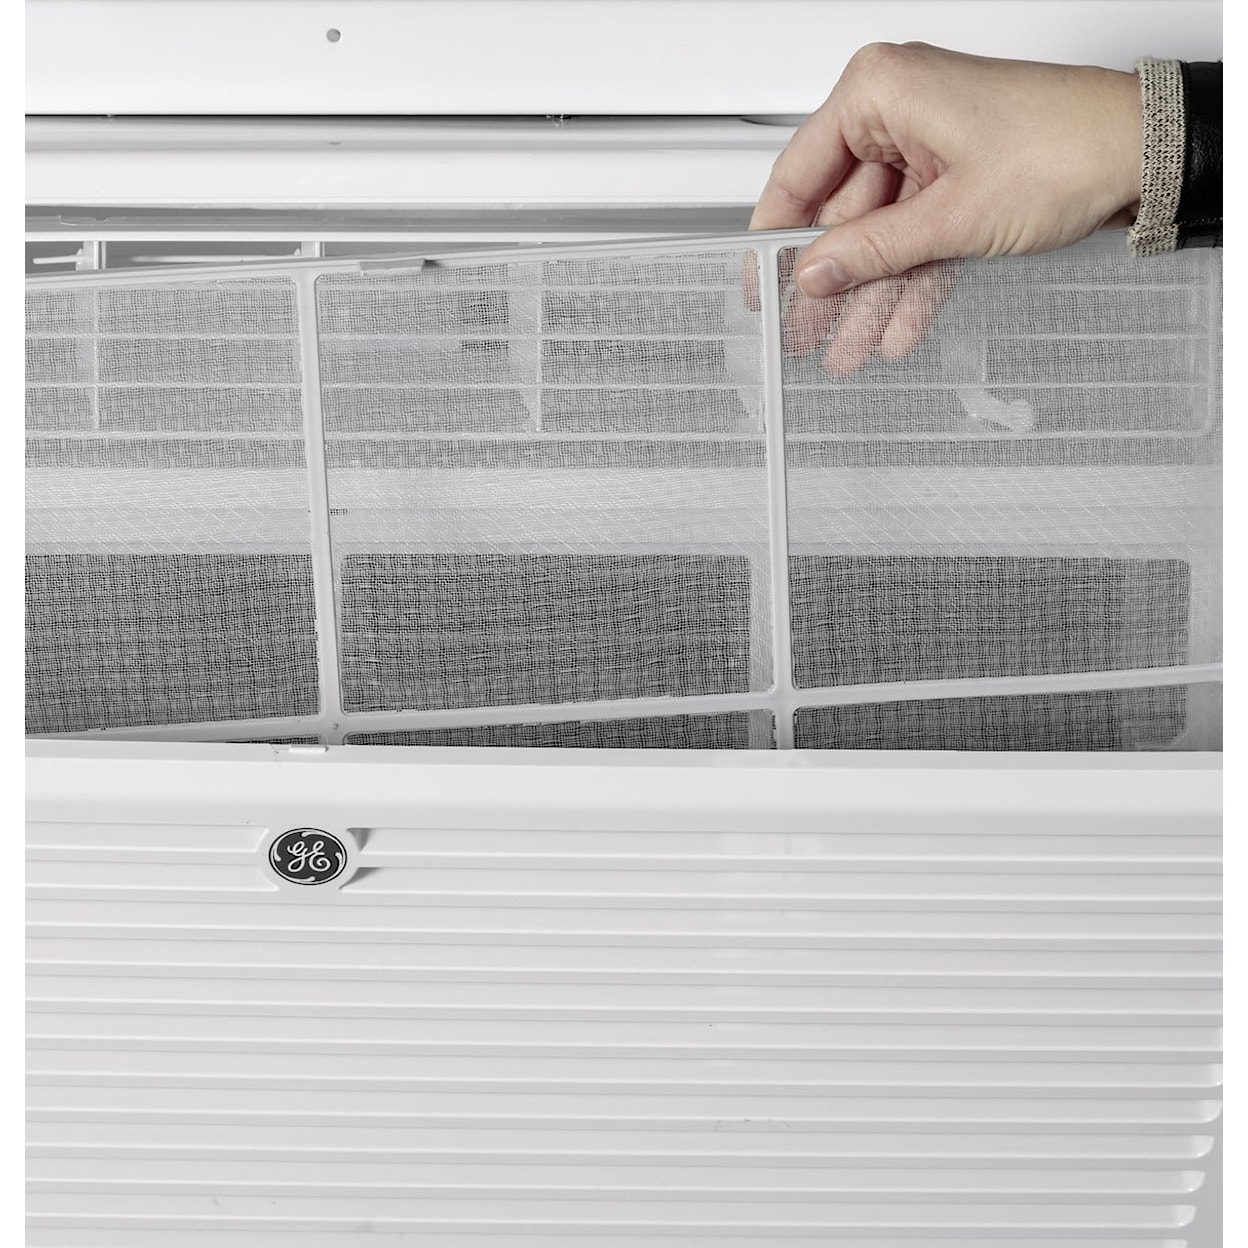 GE Appliances Air Conditioners 8,000 BTU Smart Air Conditioner